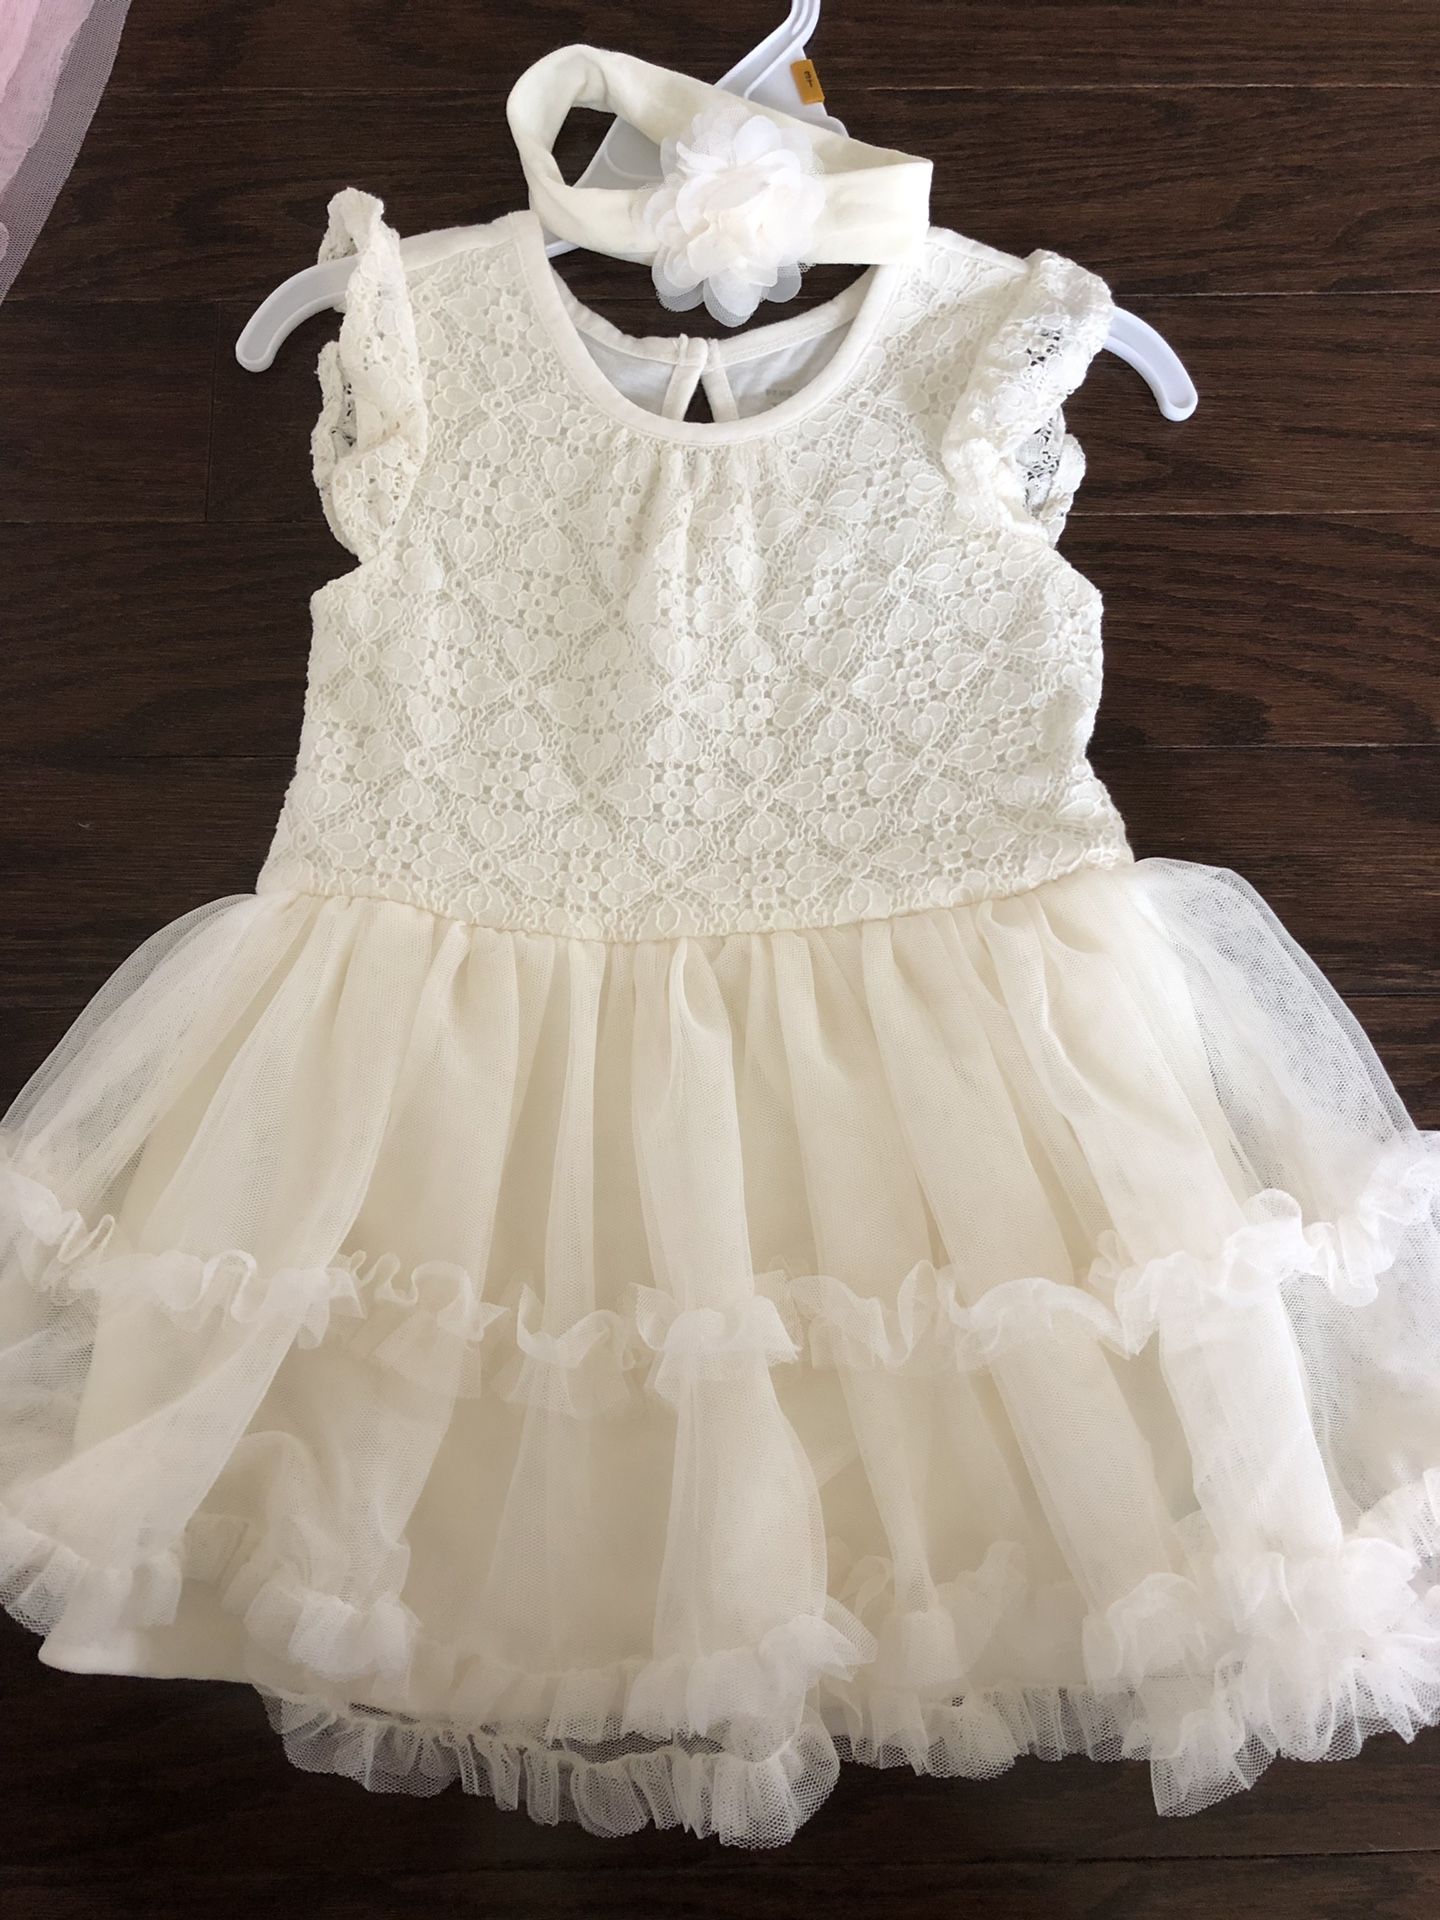 Baby dress $10